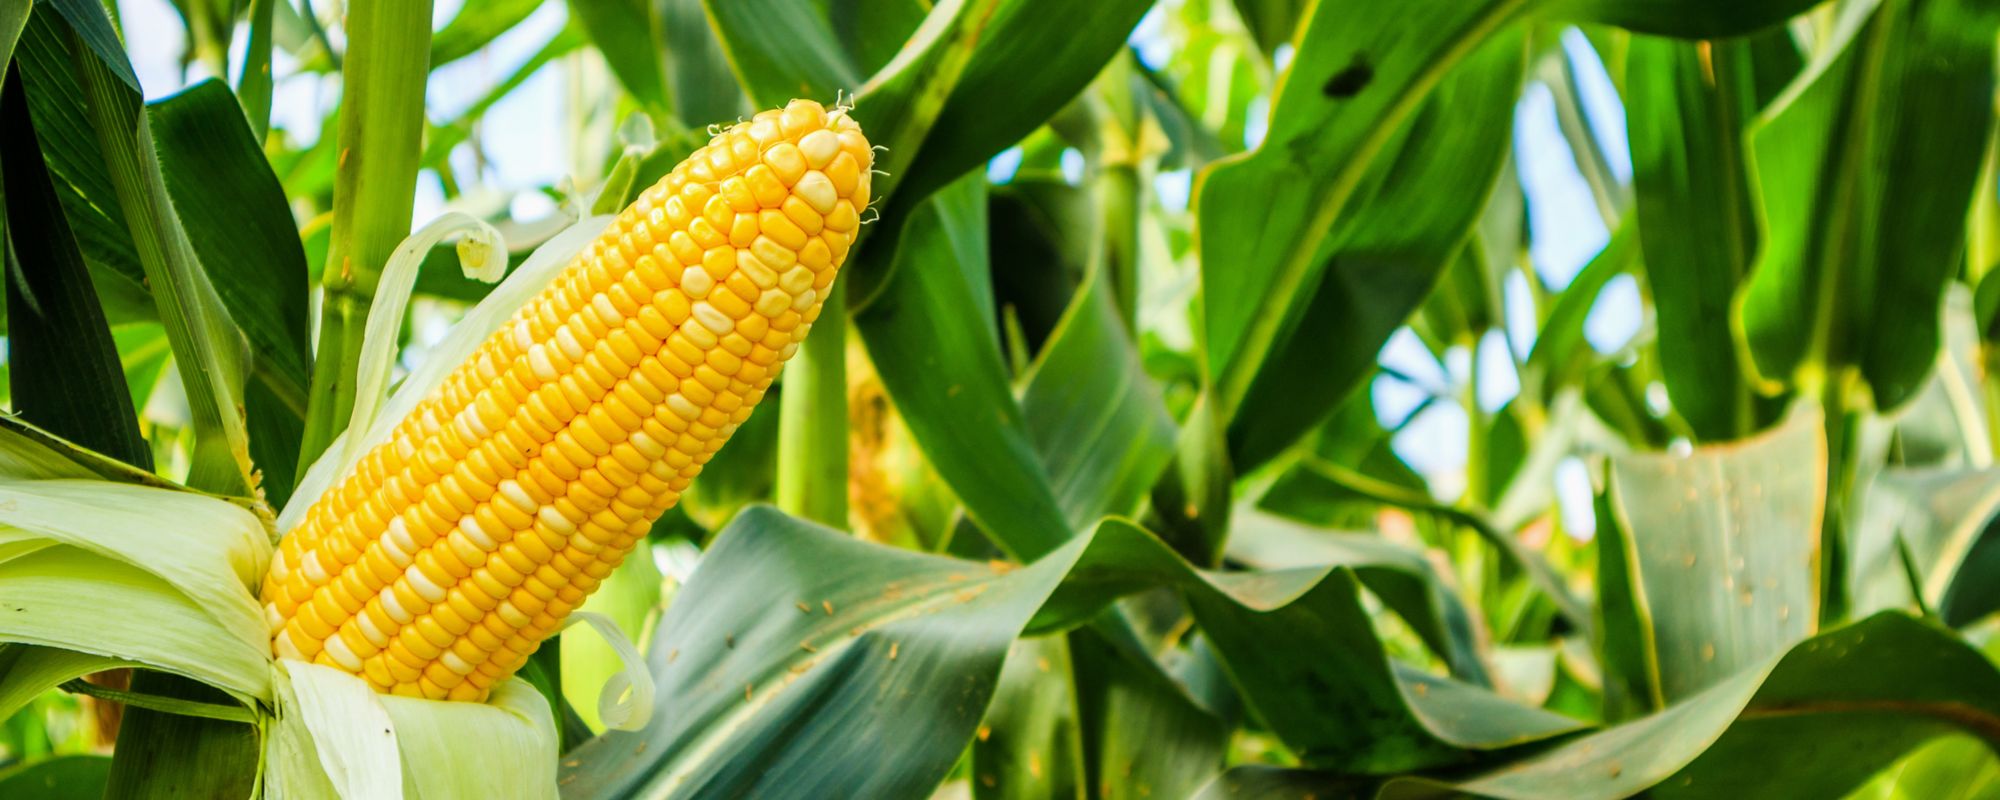 Corn under-foot fertilization